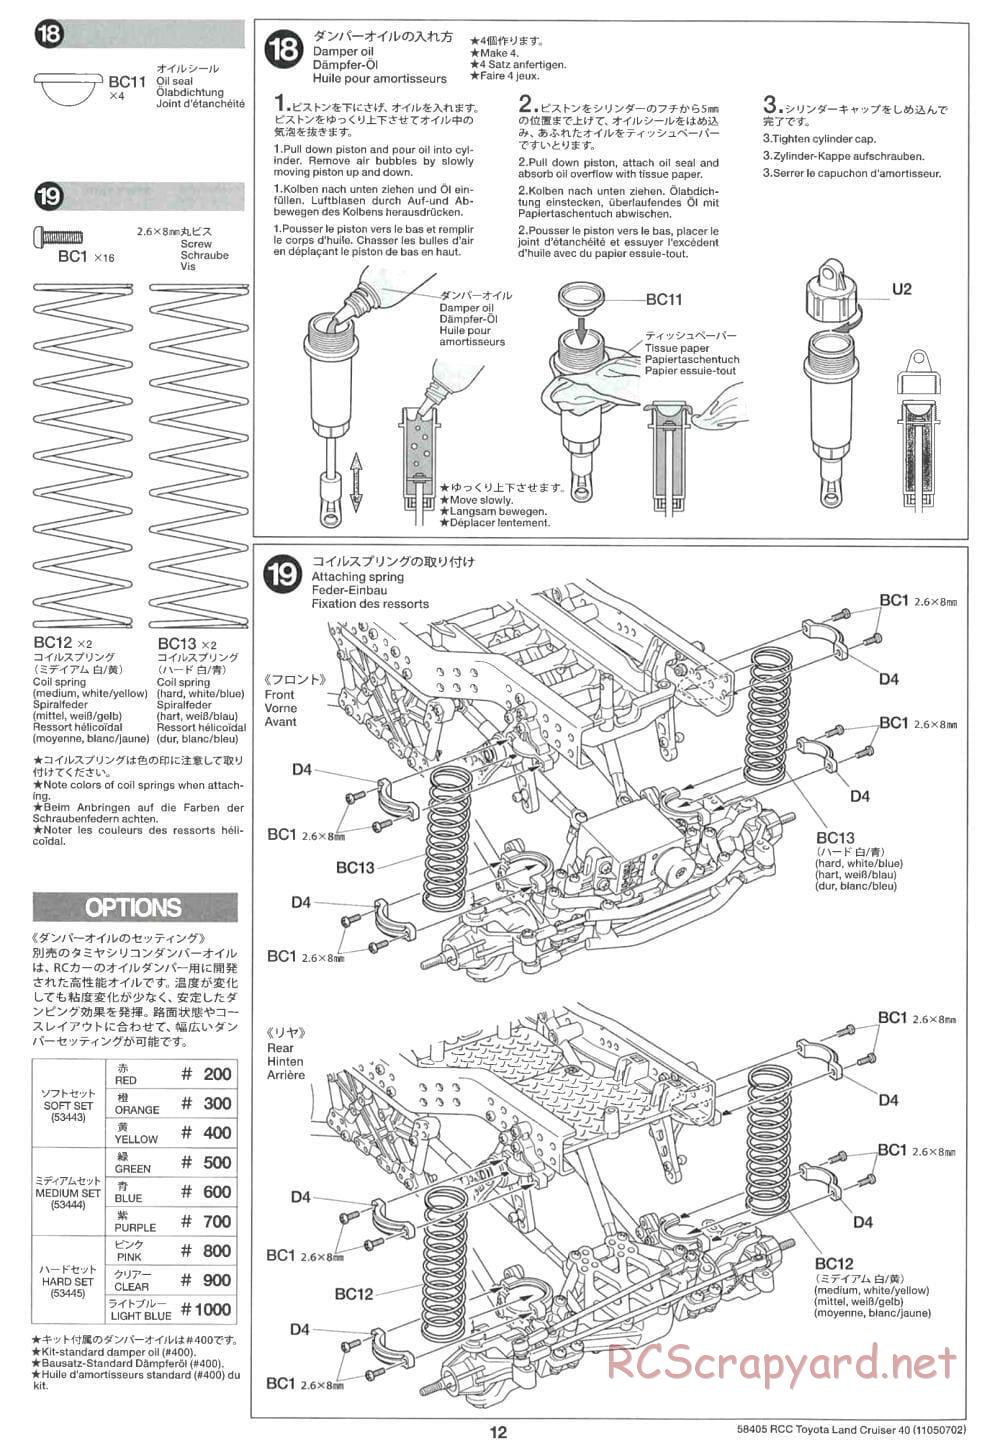 Tamiya - Toyota Land Cruiser 40 - CR-01 Chassis - Manual - Page 12